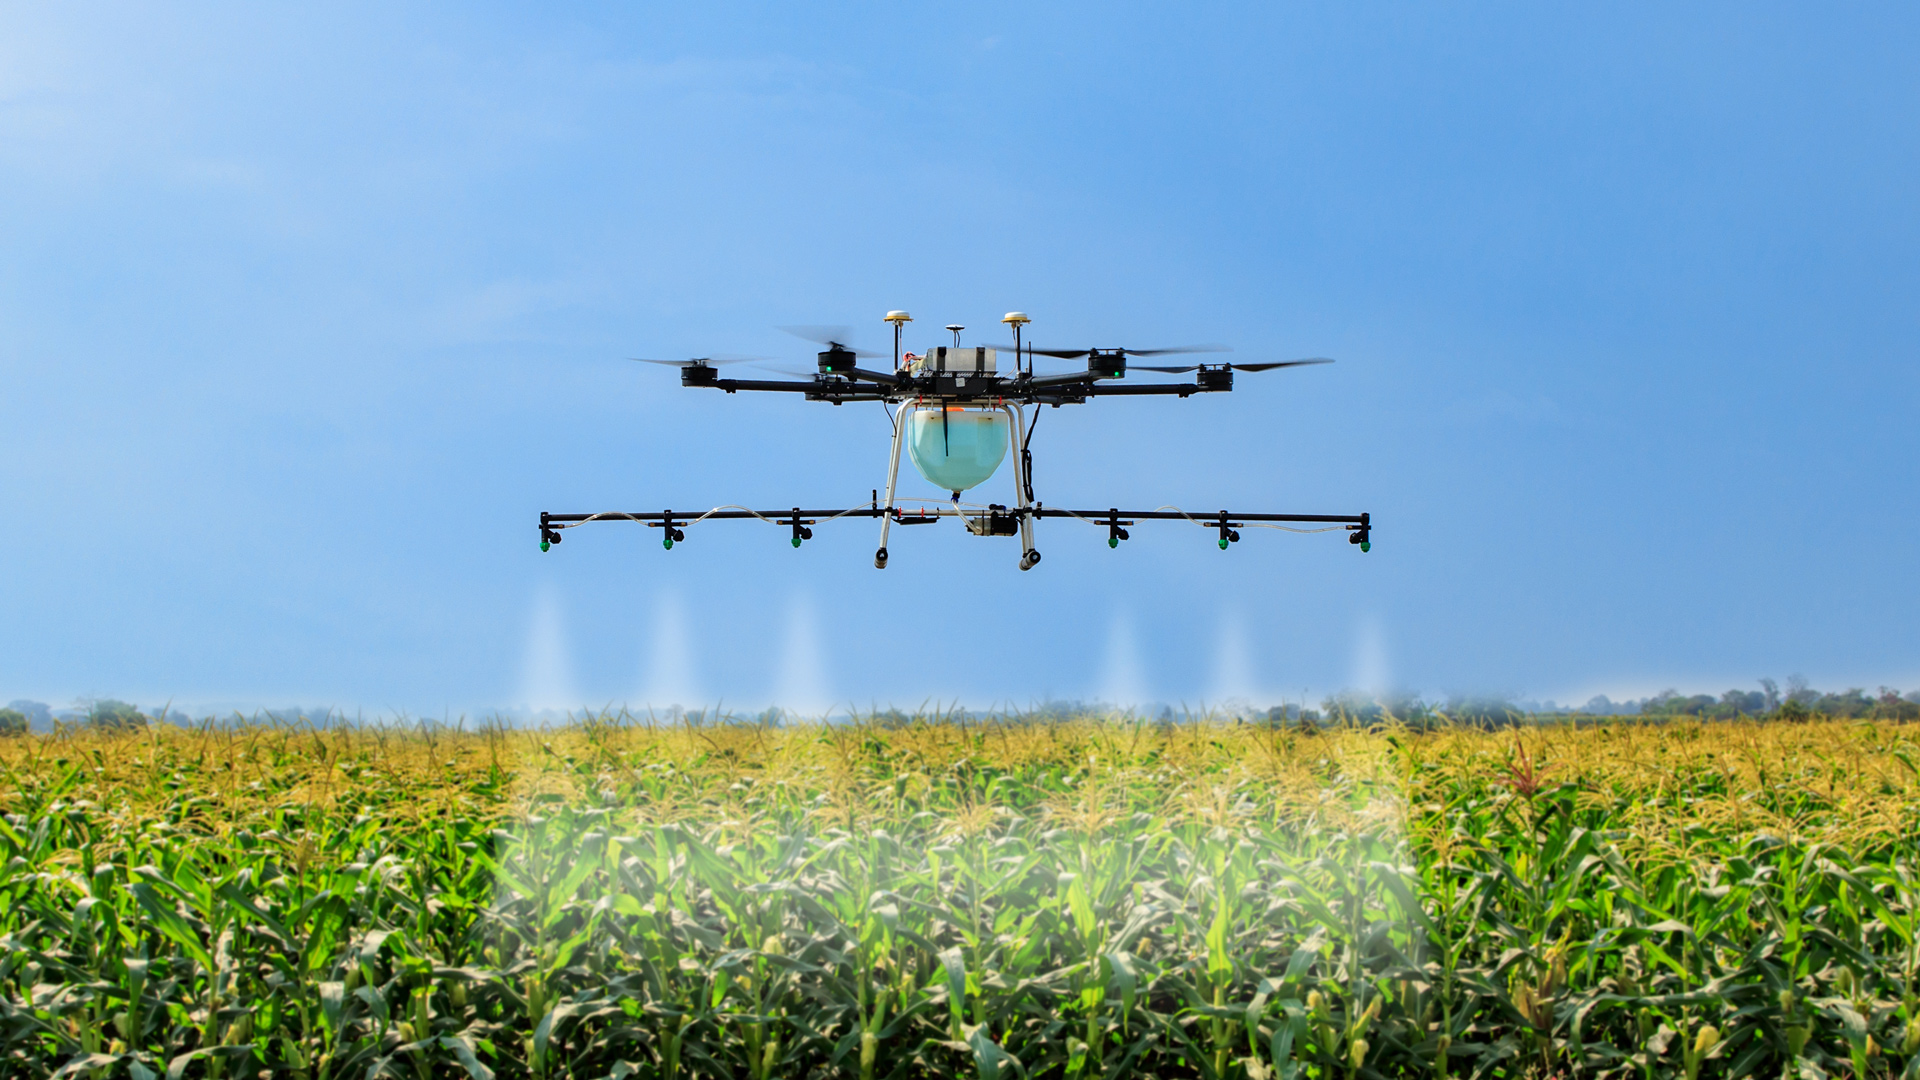 Agriculture Drone Market to 2025 Influencing Factors by Top Companies like- DJI Innovation, Autel Robotics, senseFly, Parrot, YUNEEC International, PrecisionHawk, 3D Robotics, Aibotix, Dragonfly Innovations, AeroVironment